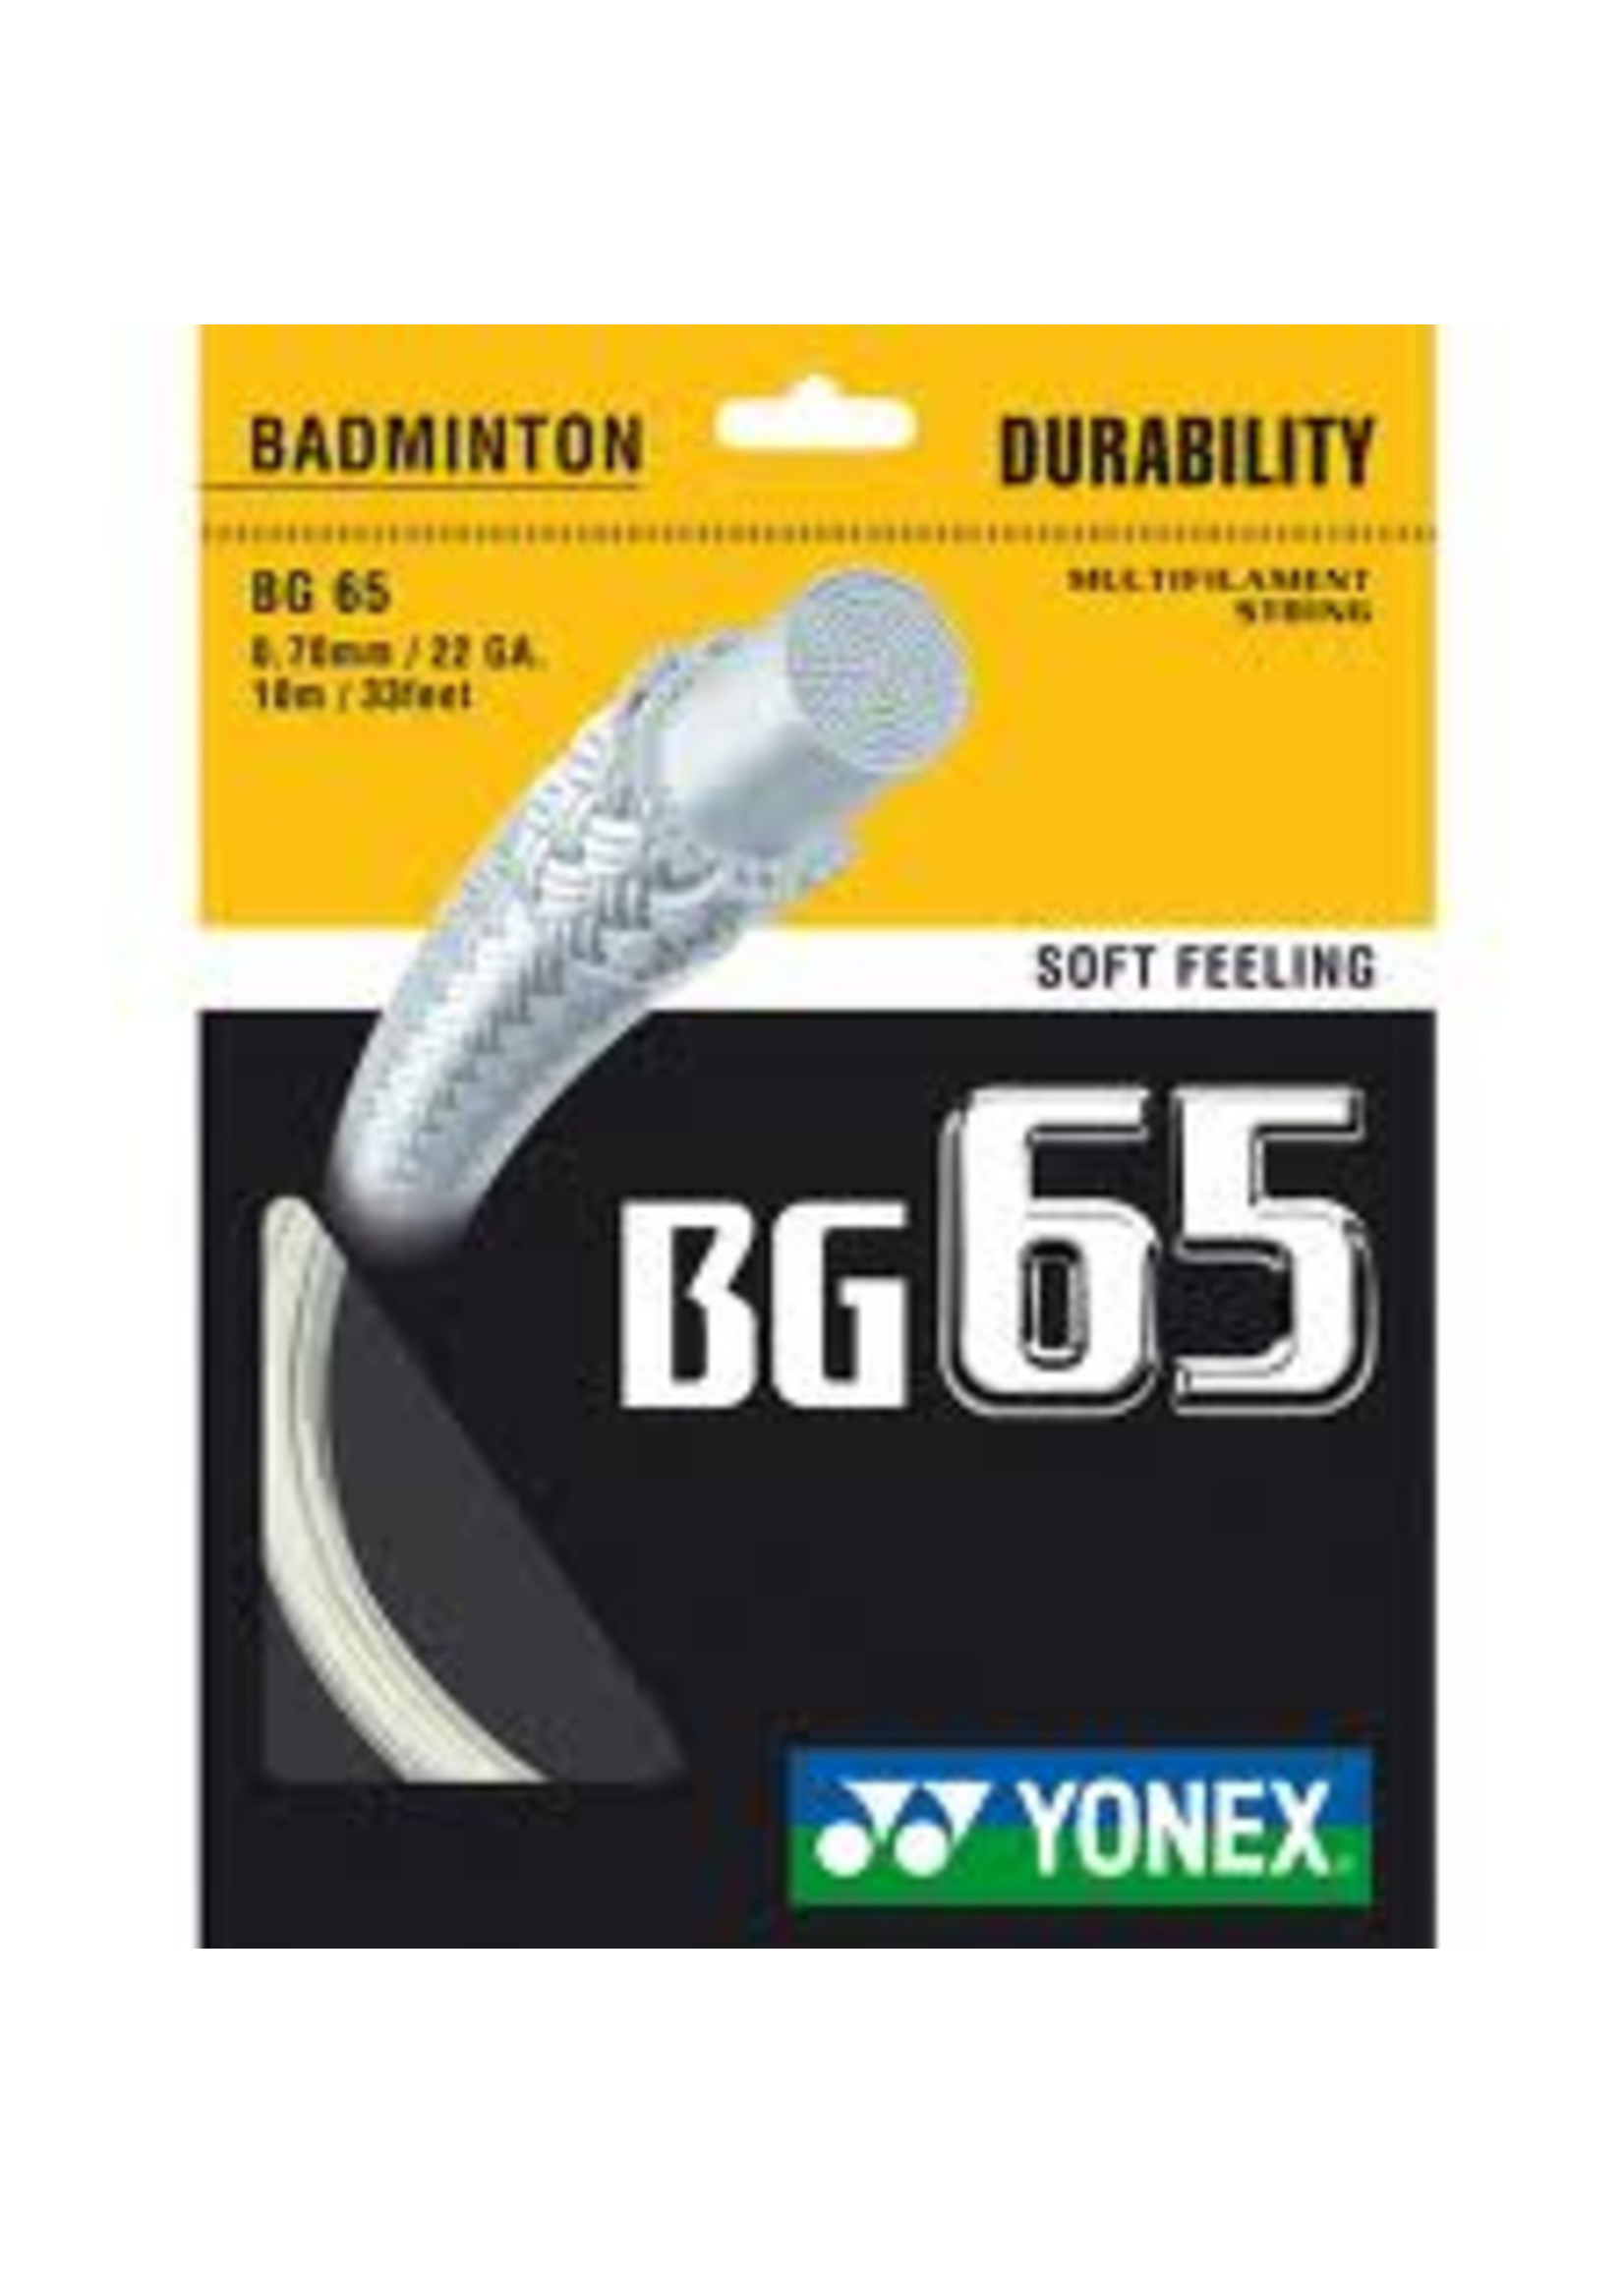 Yonex Yonex BG65 Badminton String 200m Reel